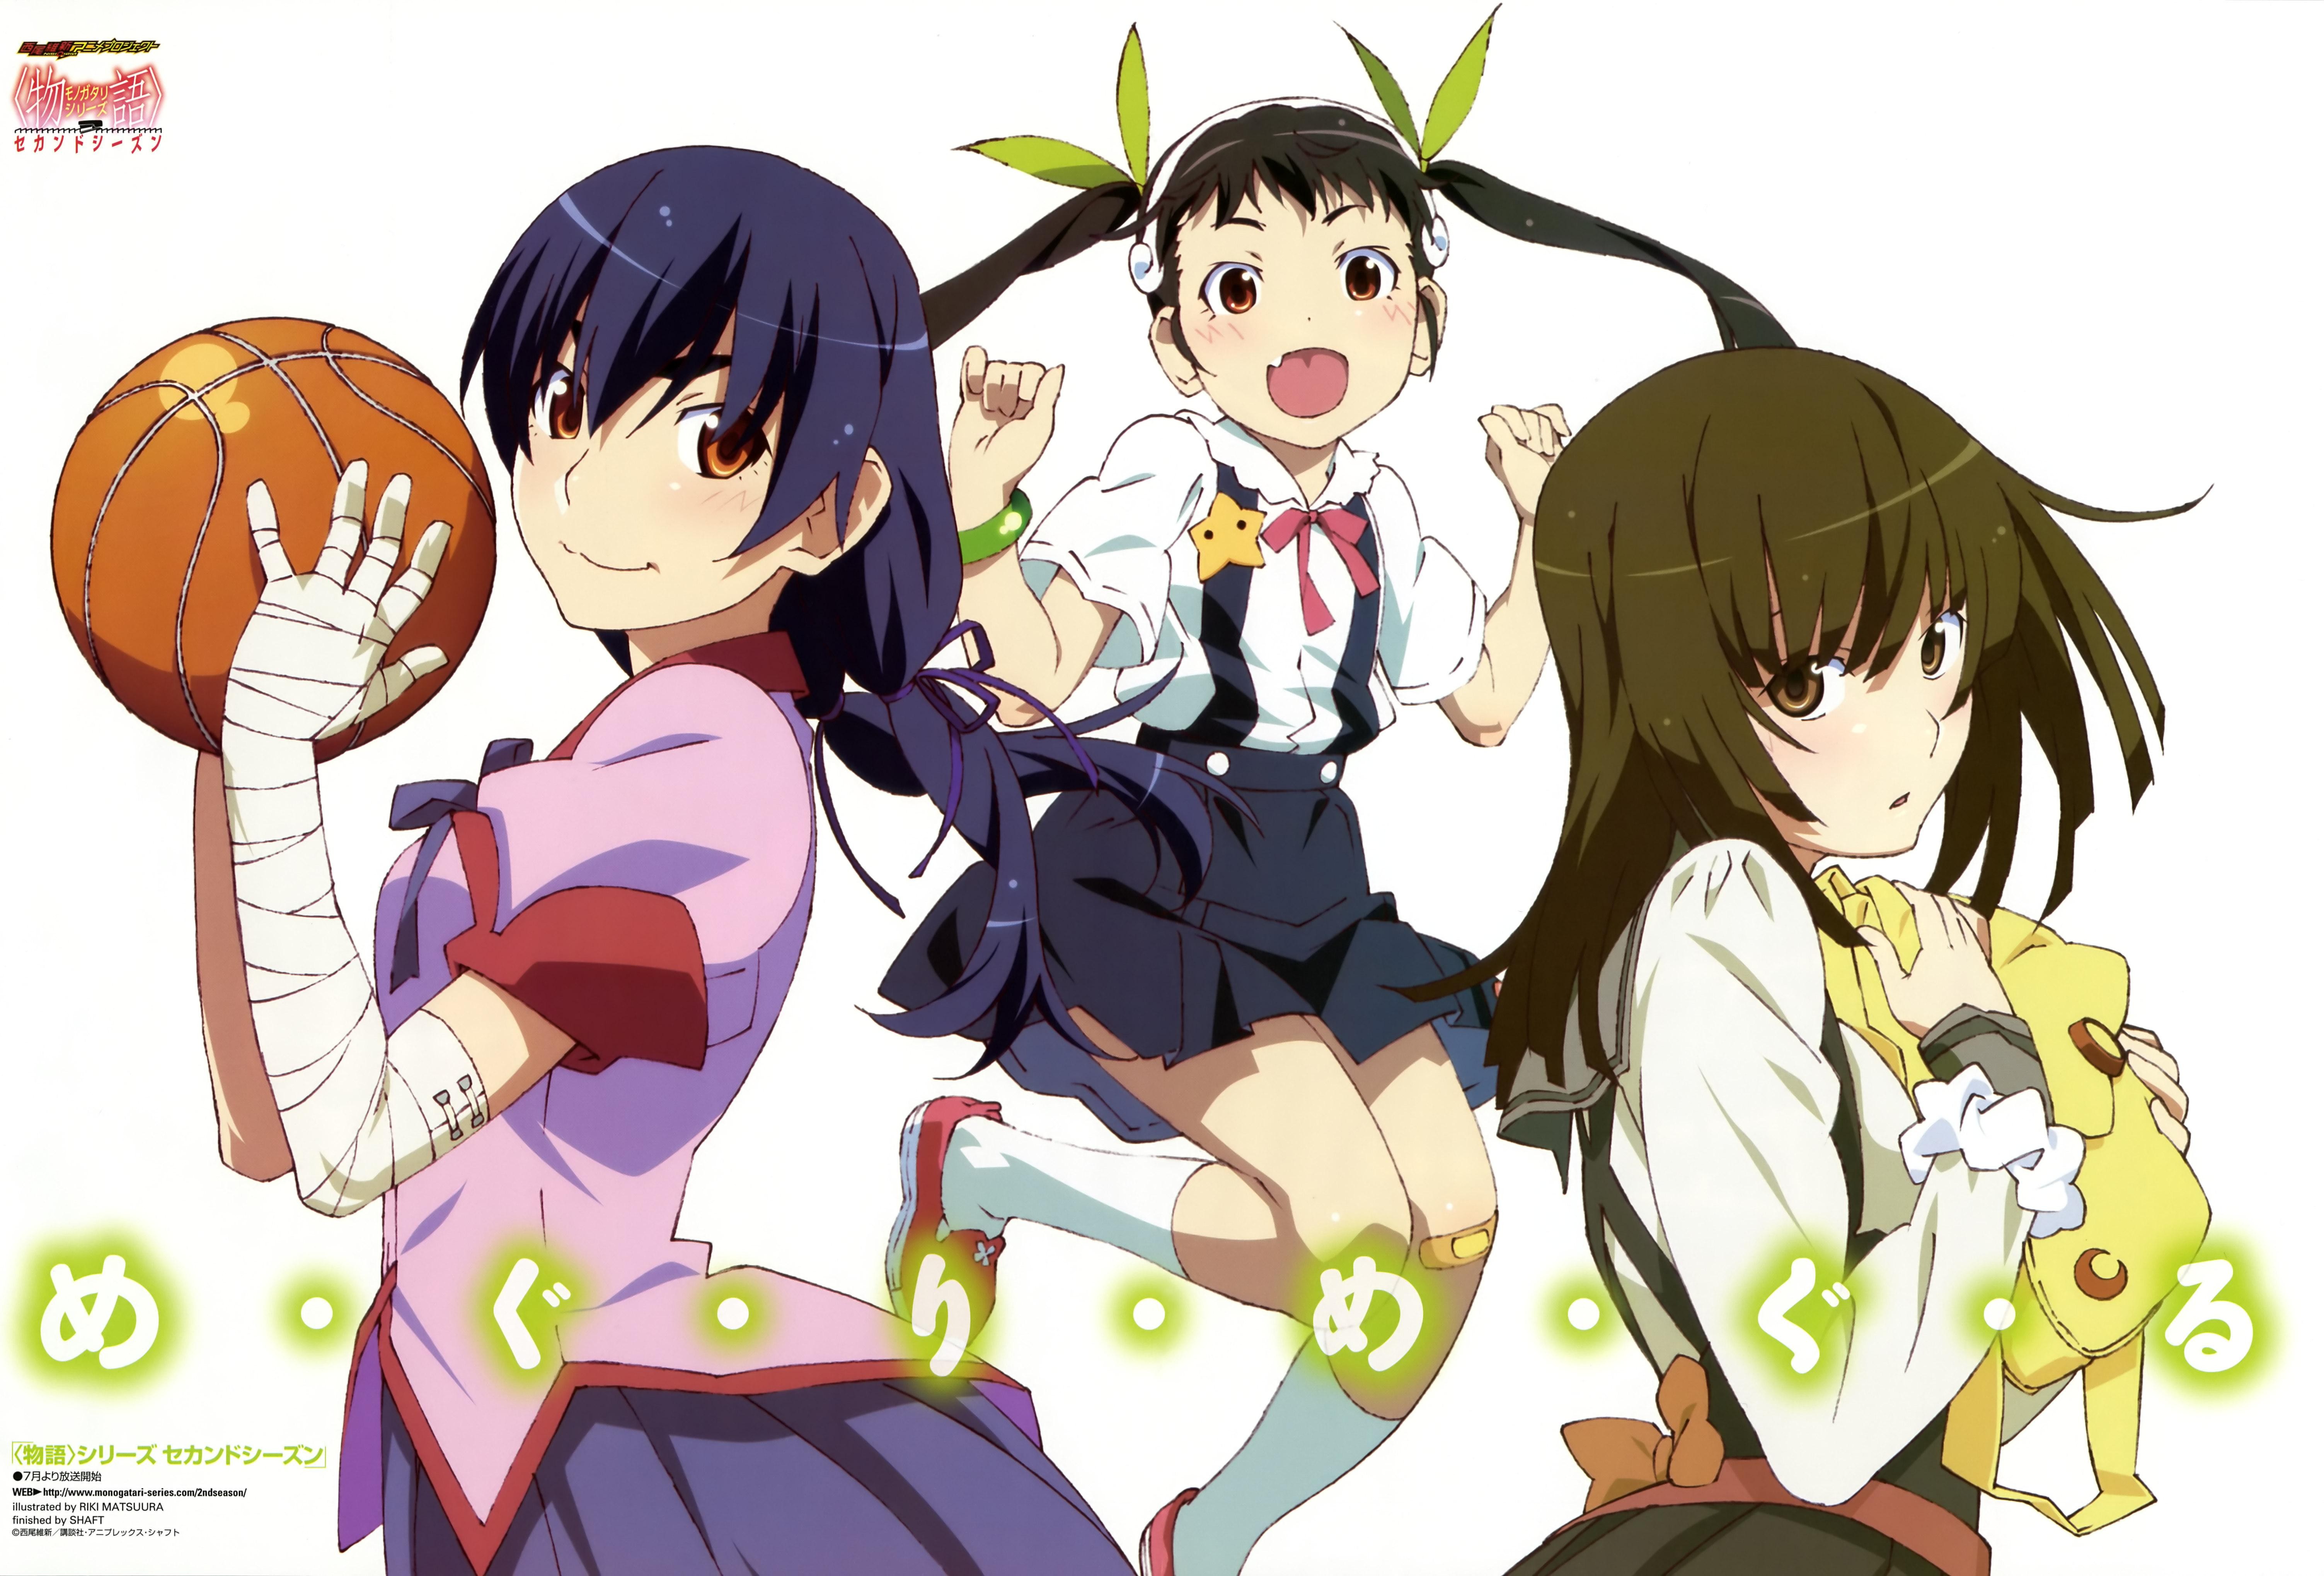 633873 Bild herunterladen animes, monogatari (serie), mayoi hachikuji, nadeko sengoku, suruga kanbaru - Hintergrundbilder und Bildschirmschoner kostenlos